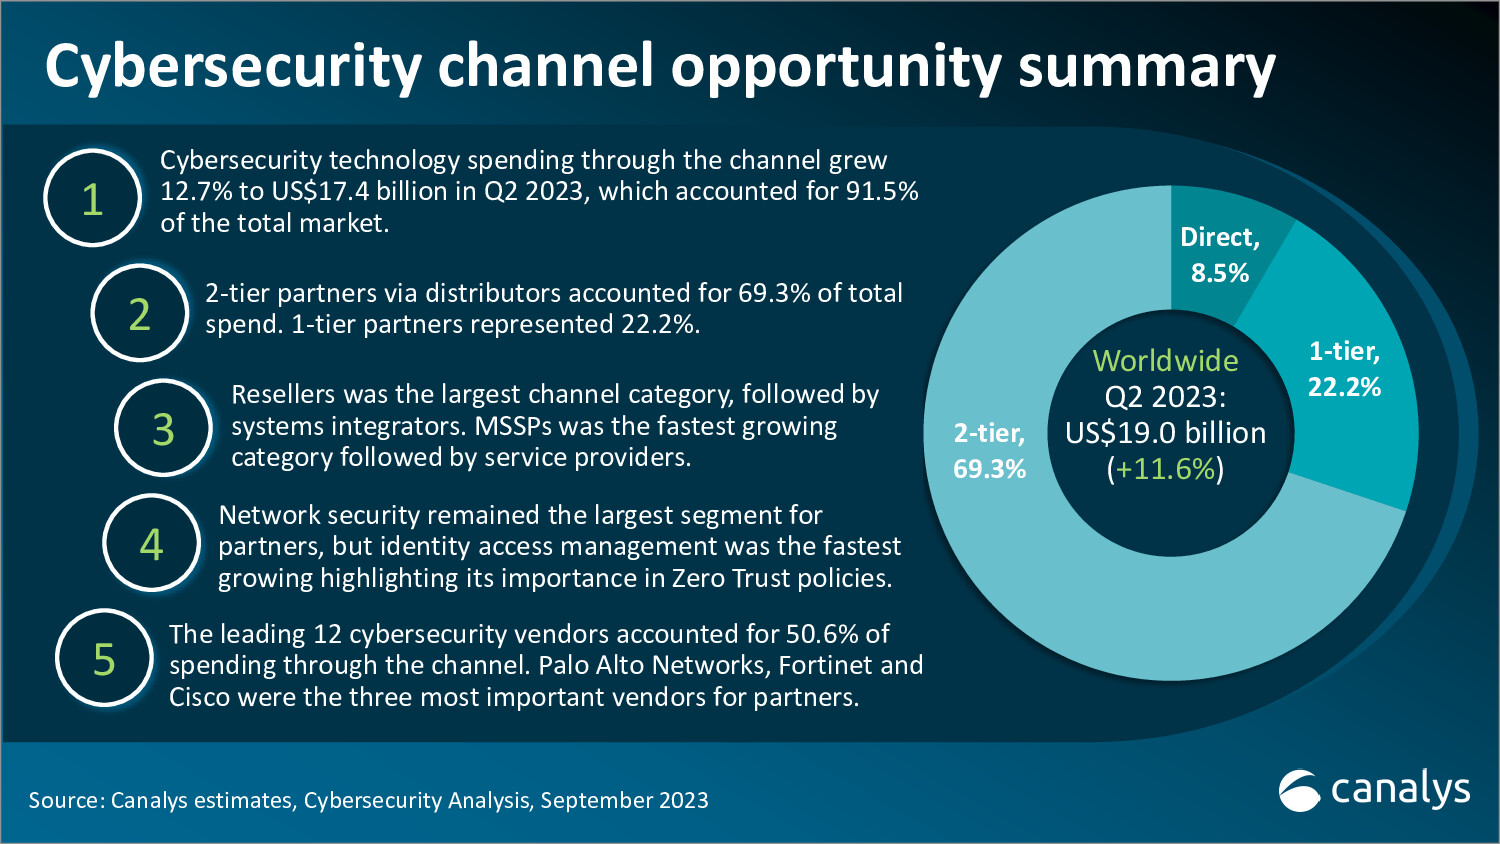 Worldwide cybersecurity channel opportunity Q2 2023